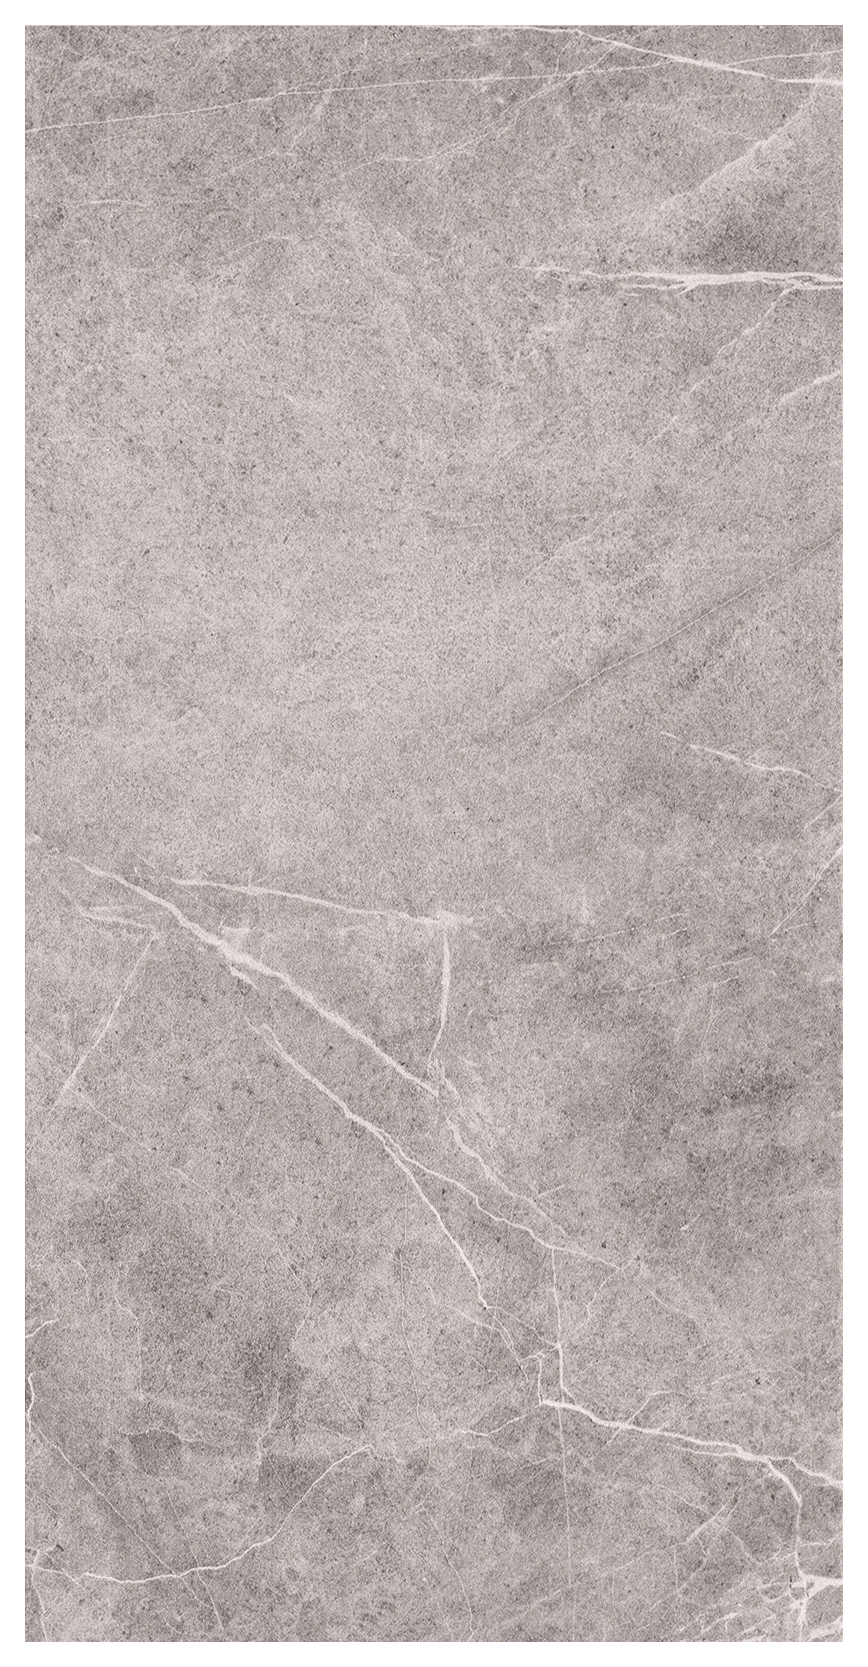 Image of Wickes Luna Light Grey Ceramic Wall & Floor Tile - 600 x 300mm - Sample